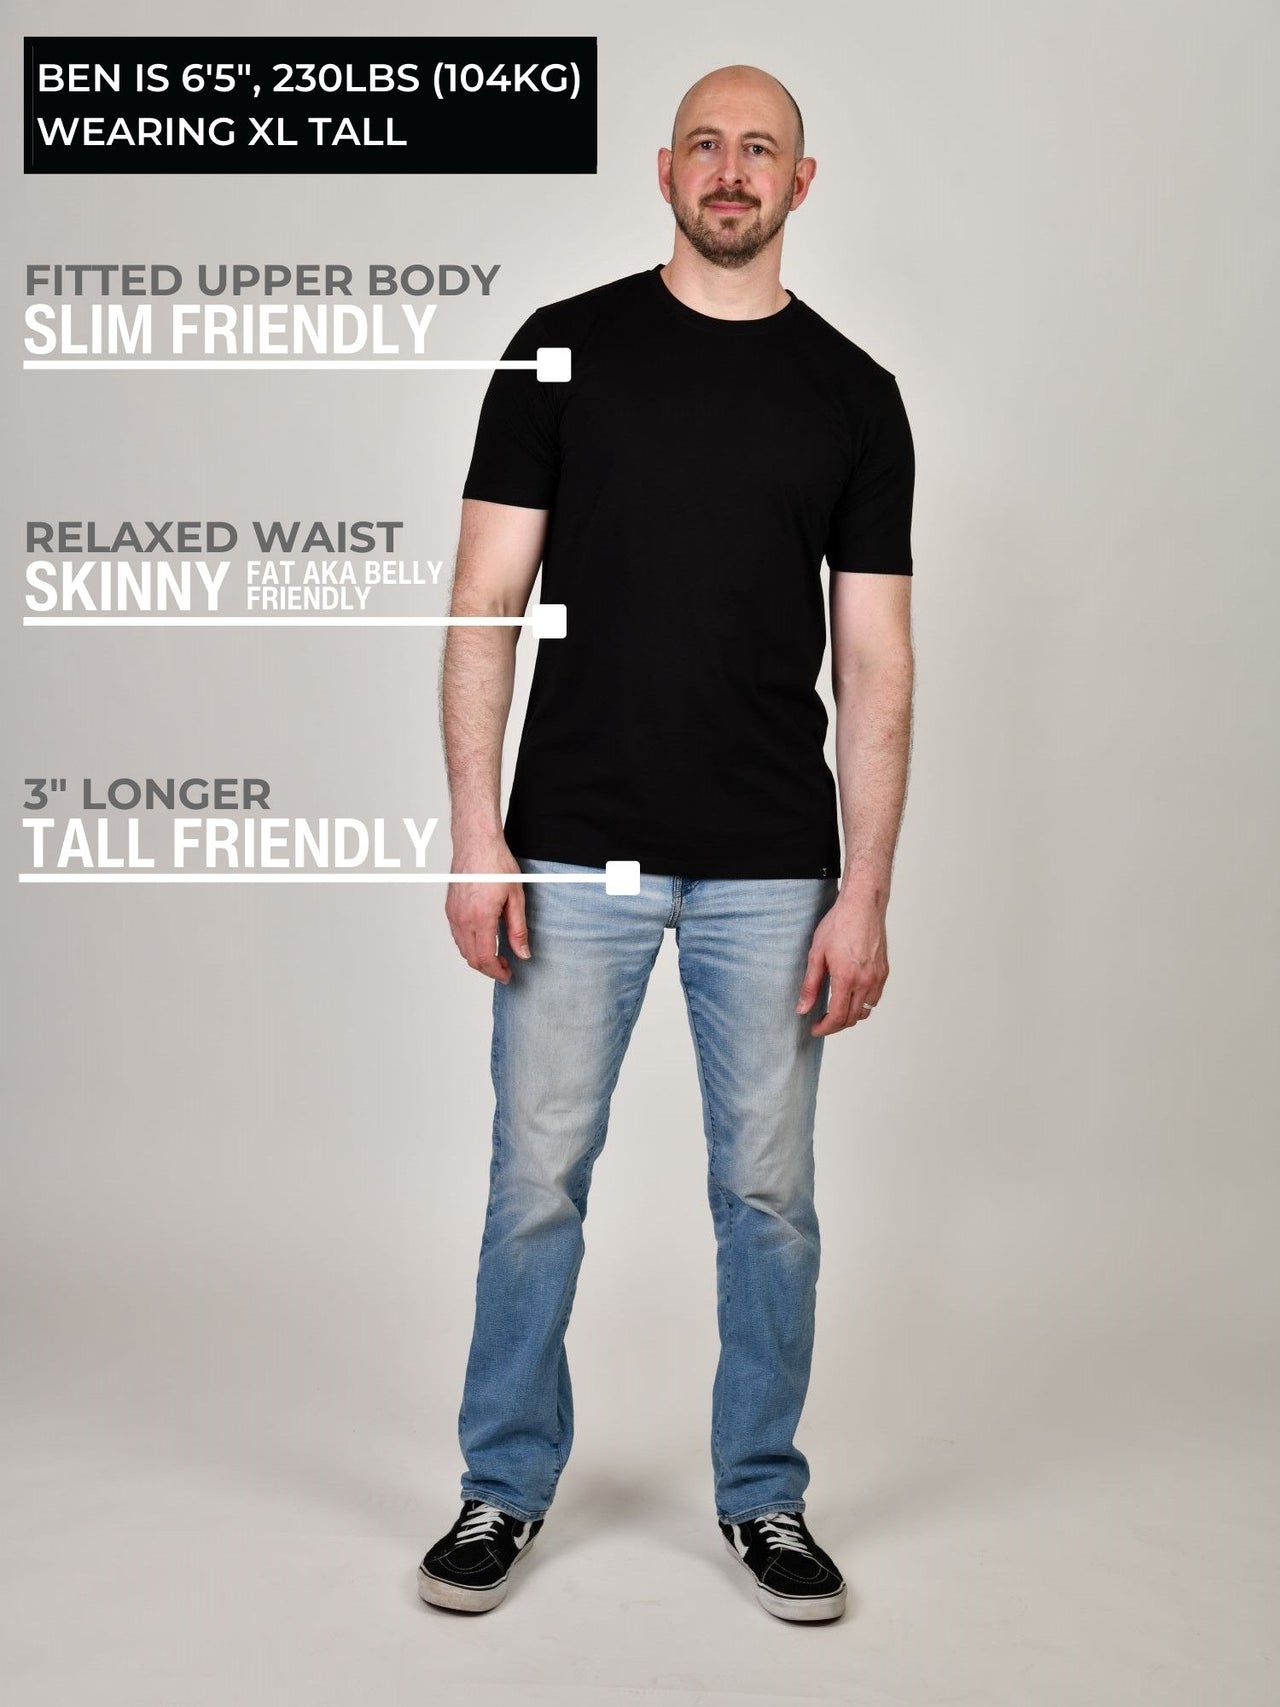 A head to toe shot of a tall muscular guy wearing a black XL tall t-shirt.